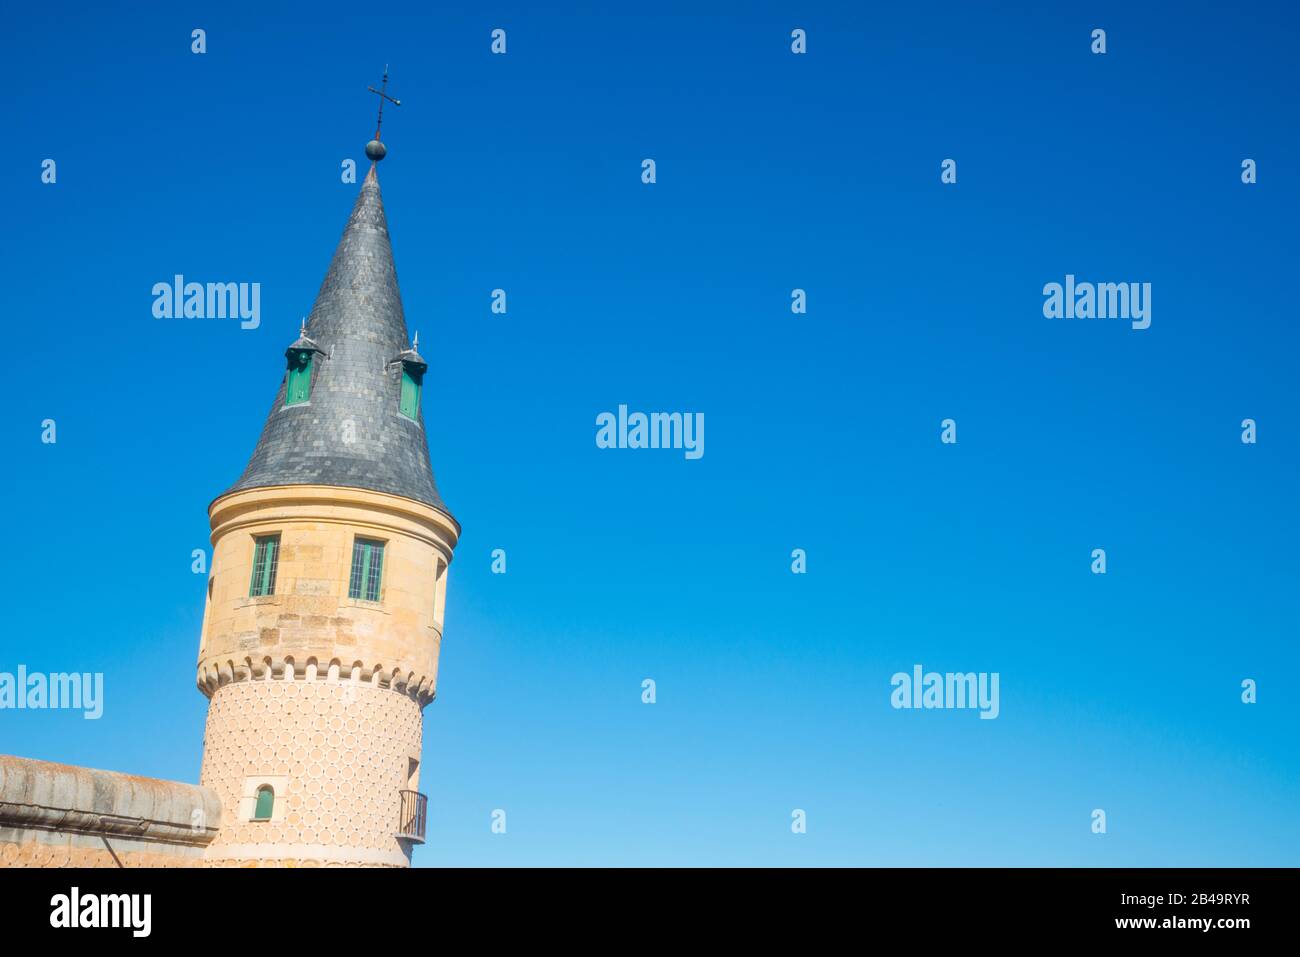 Tower of the Alcazar. Segovia, Spain. Stock Photo